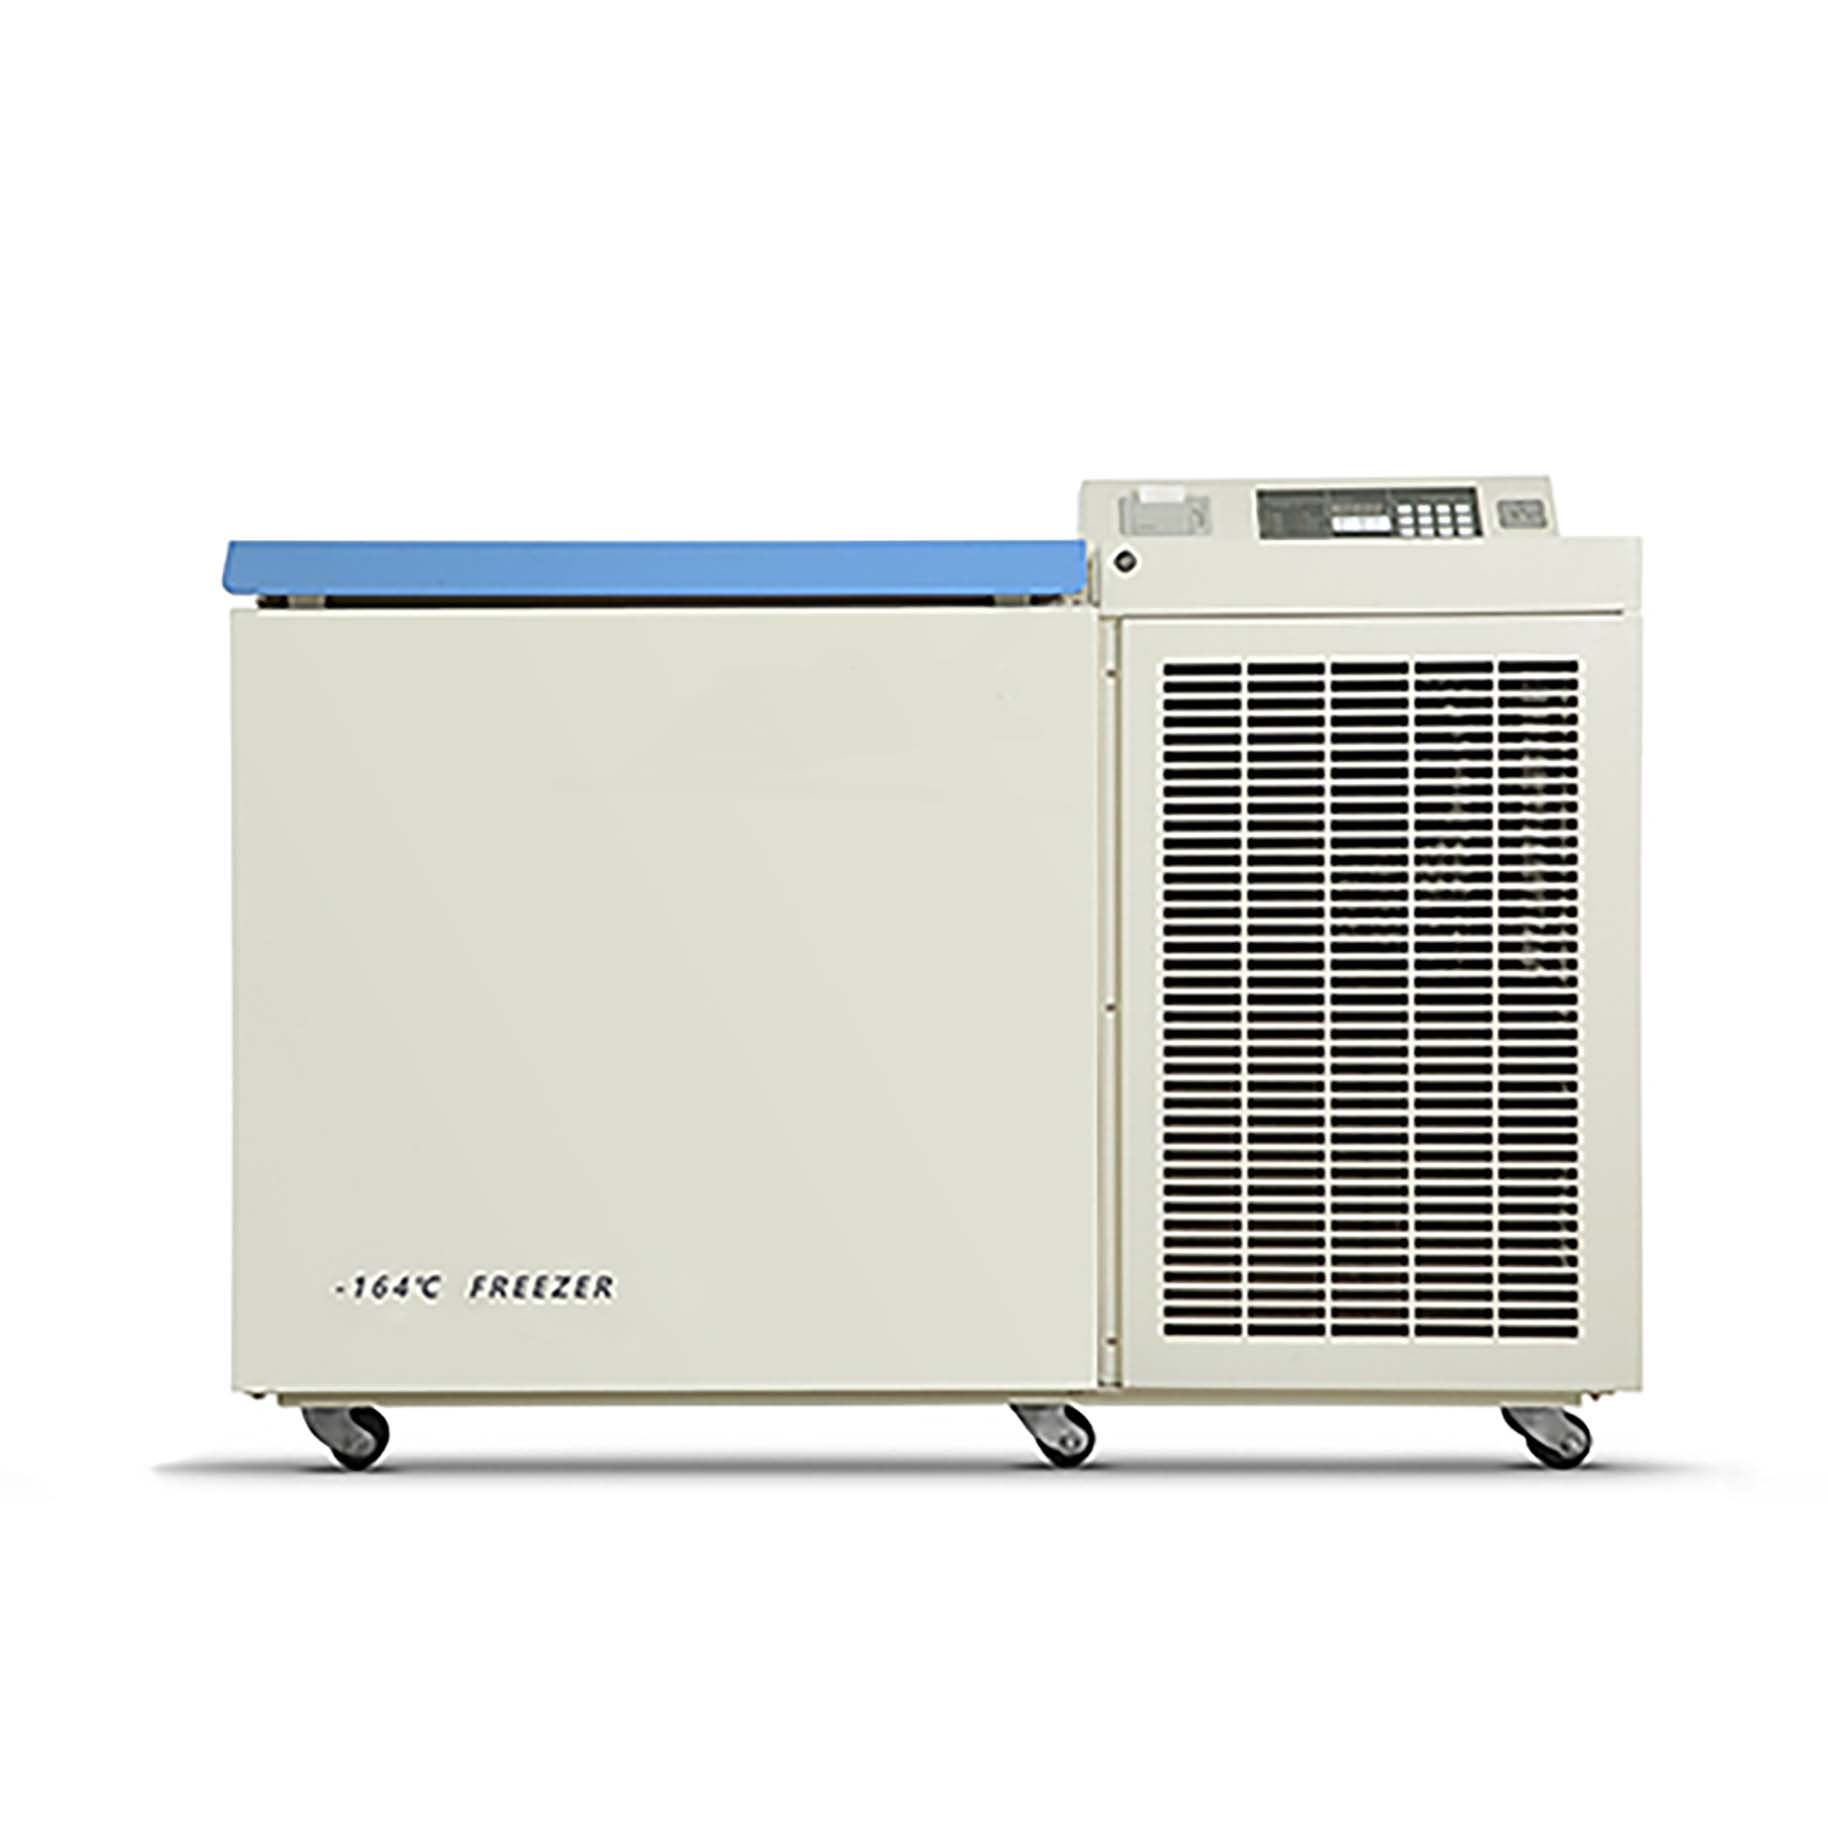 -164℃ cryogenic freezer HG-ZW128